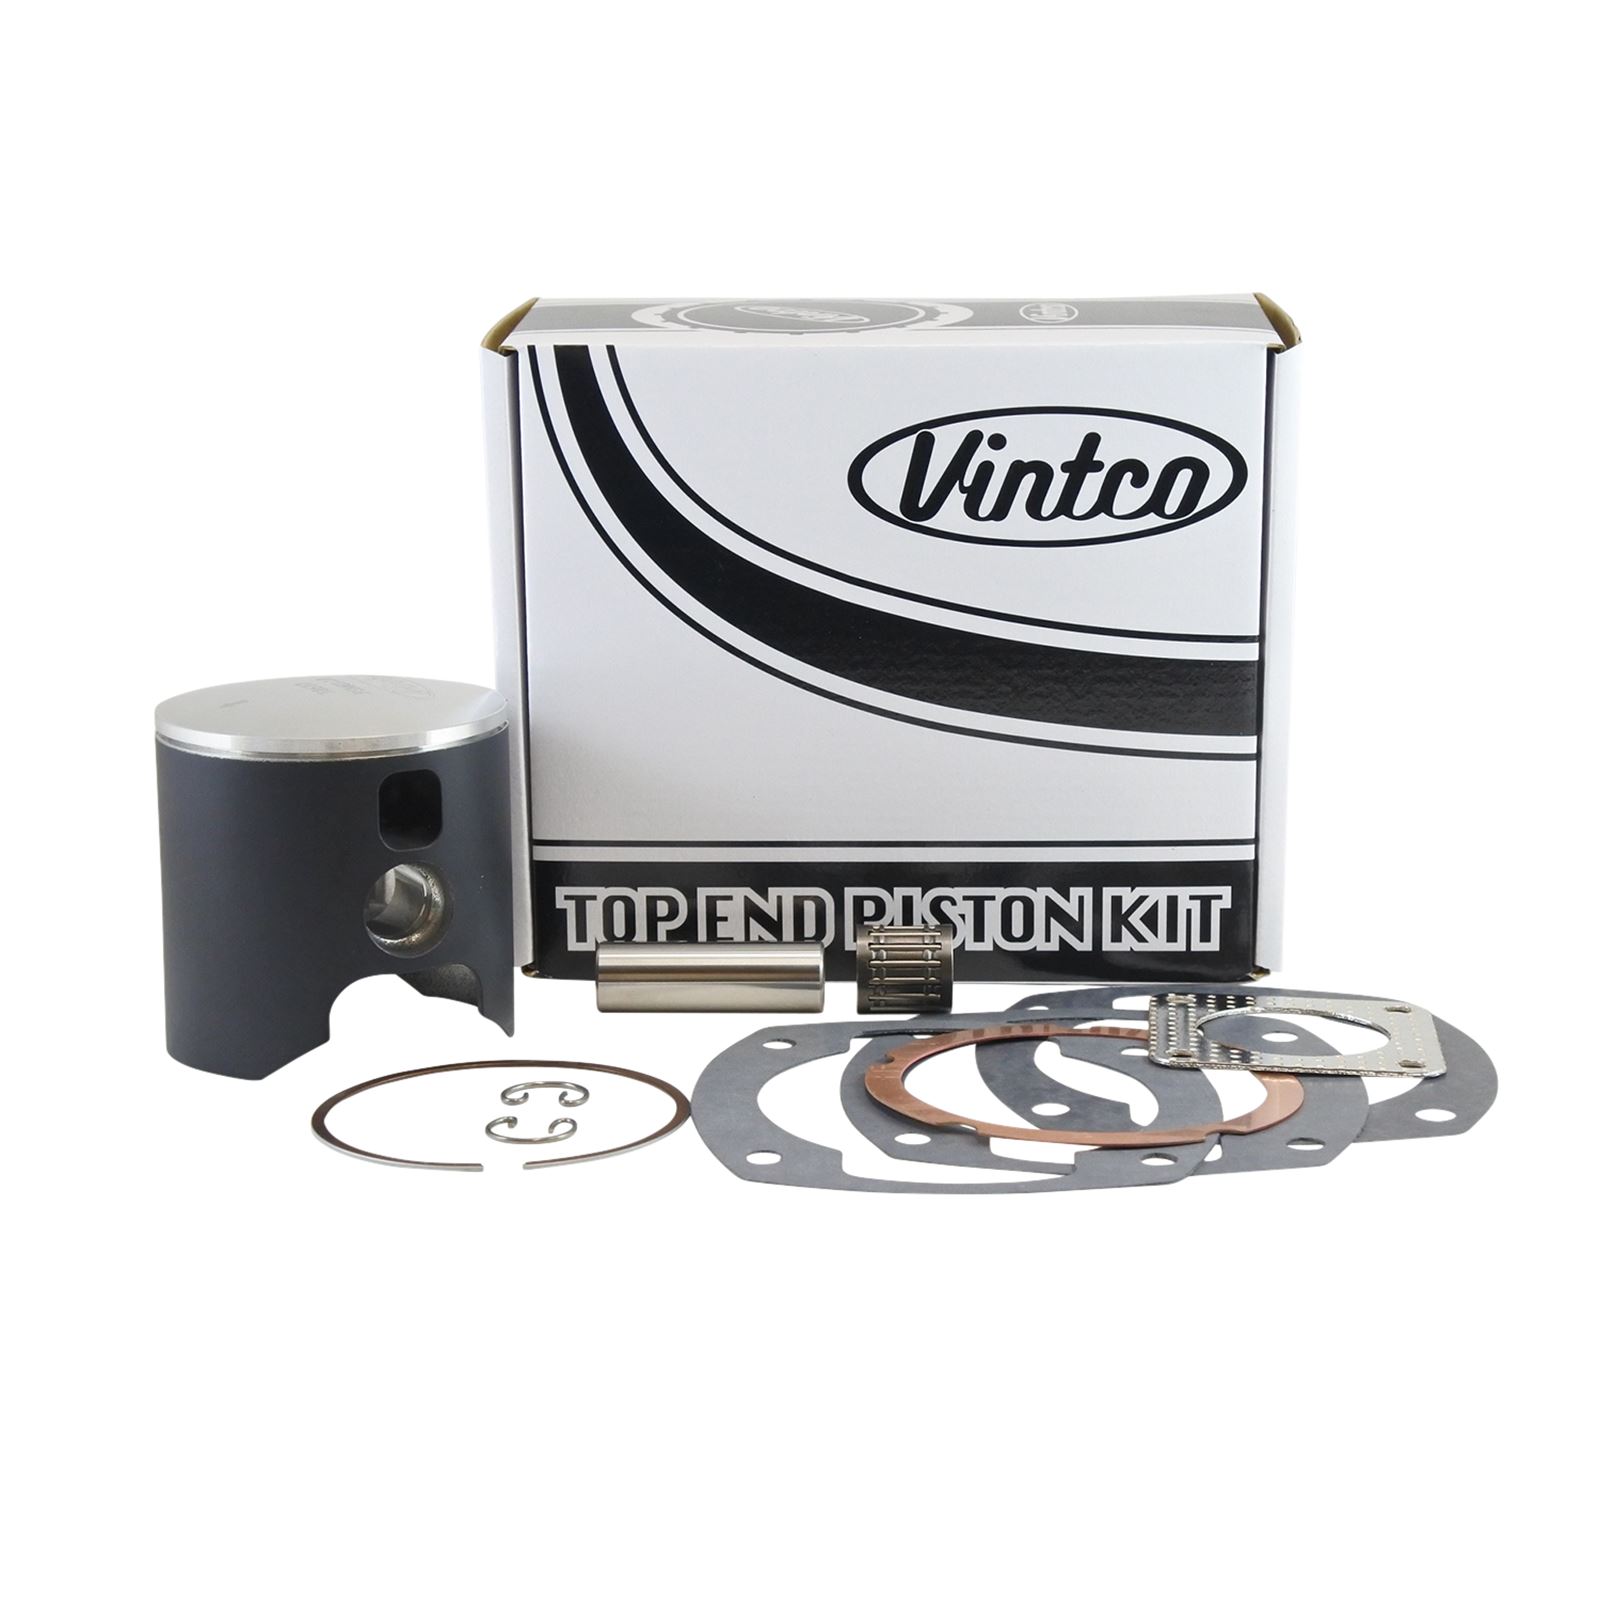 Vintco Top End Piston Kit - KTA05-1.0